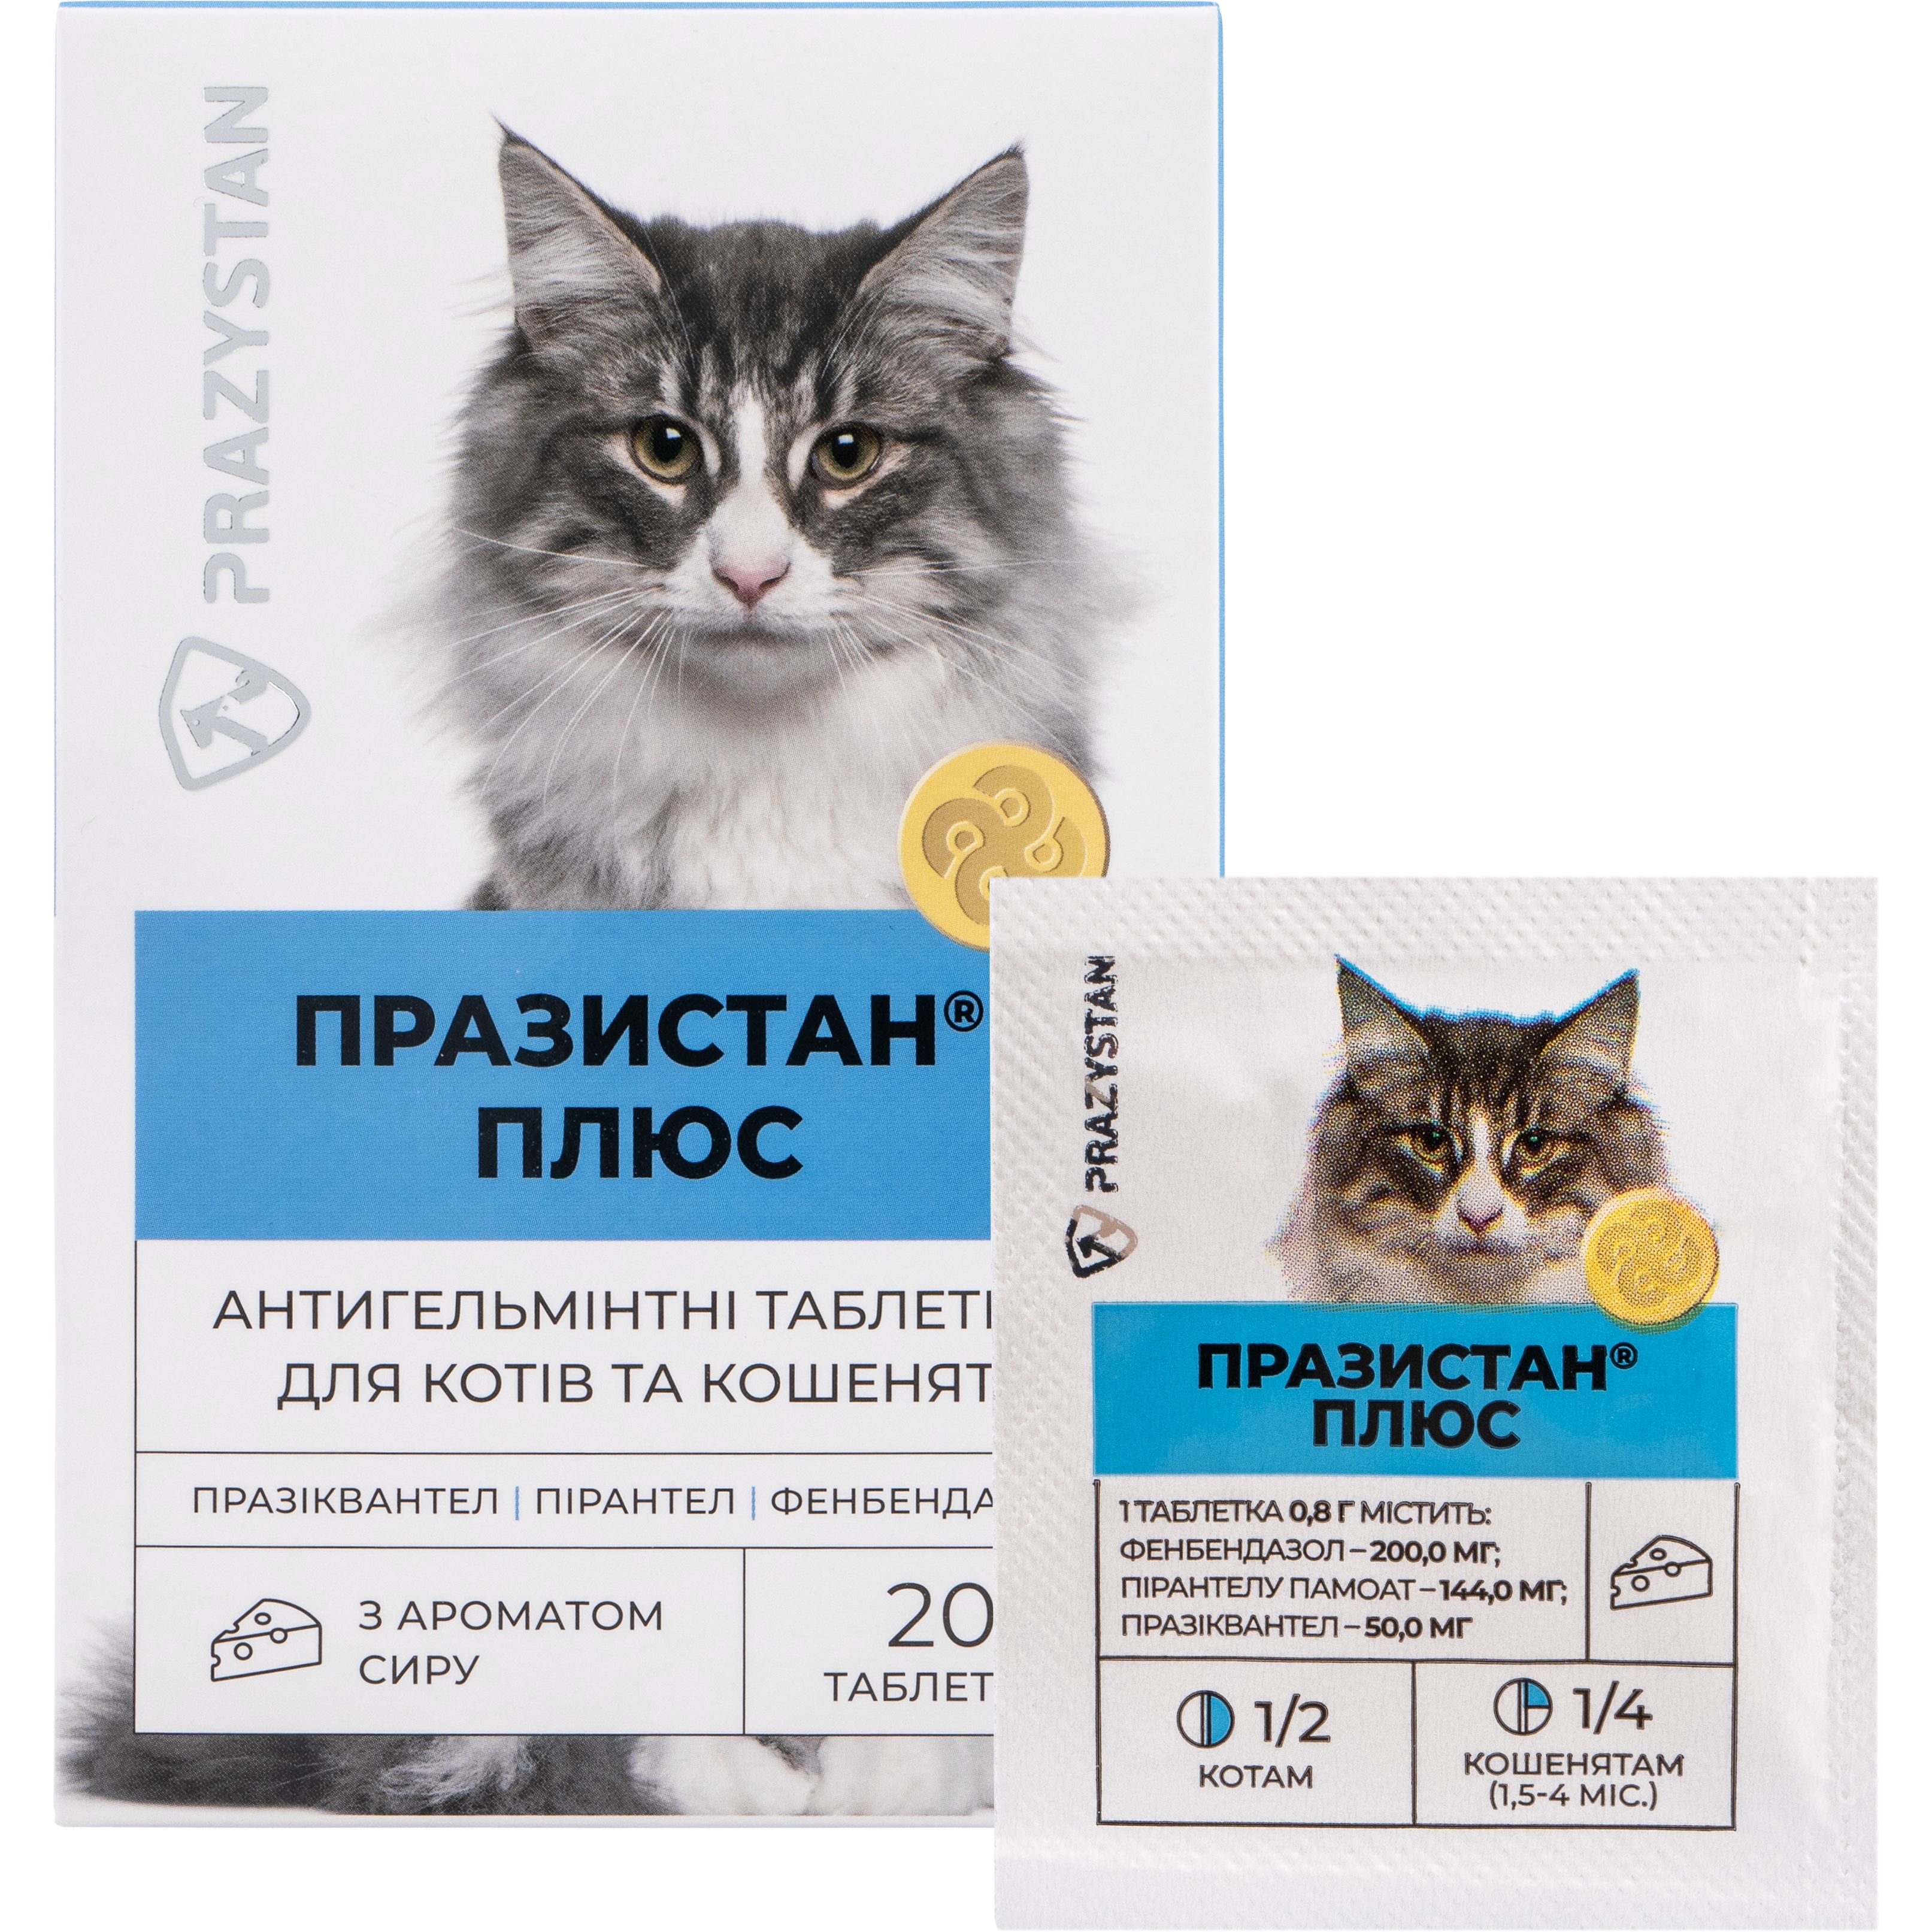 Антигельминтные таблетки Vitomax Празистан+ для кошек с ароматом сыра, 20 таблеток - фото 2